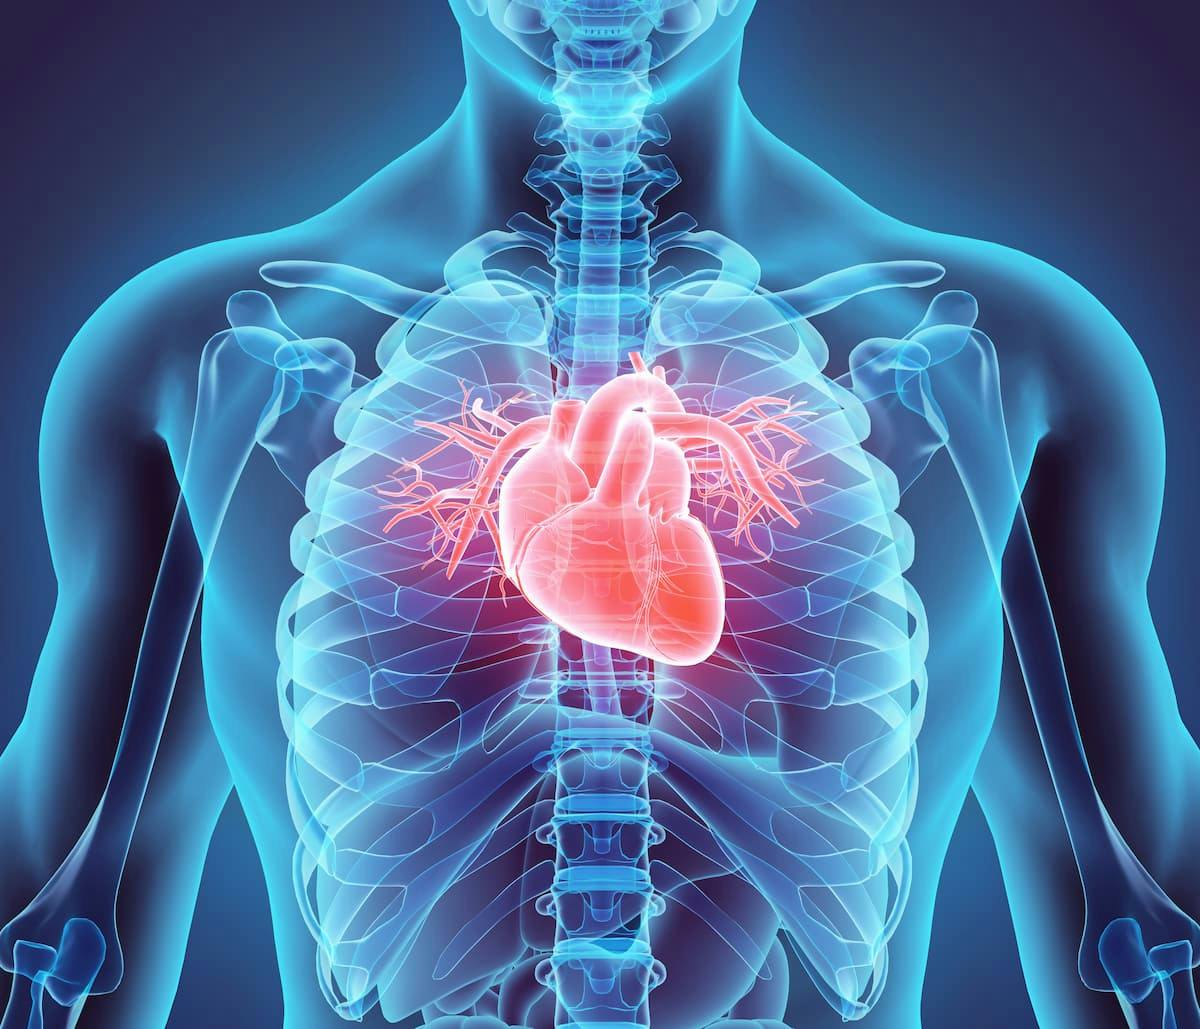 BioCardia's CardiAMP Heart Failure Cell Therapy Faces Uncertain Future